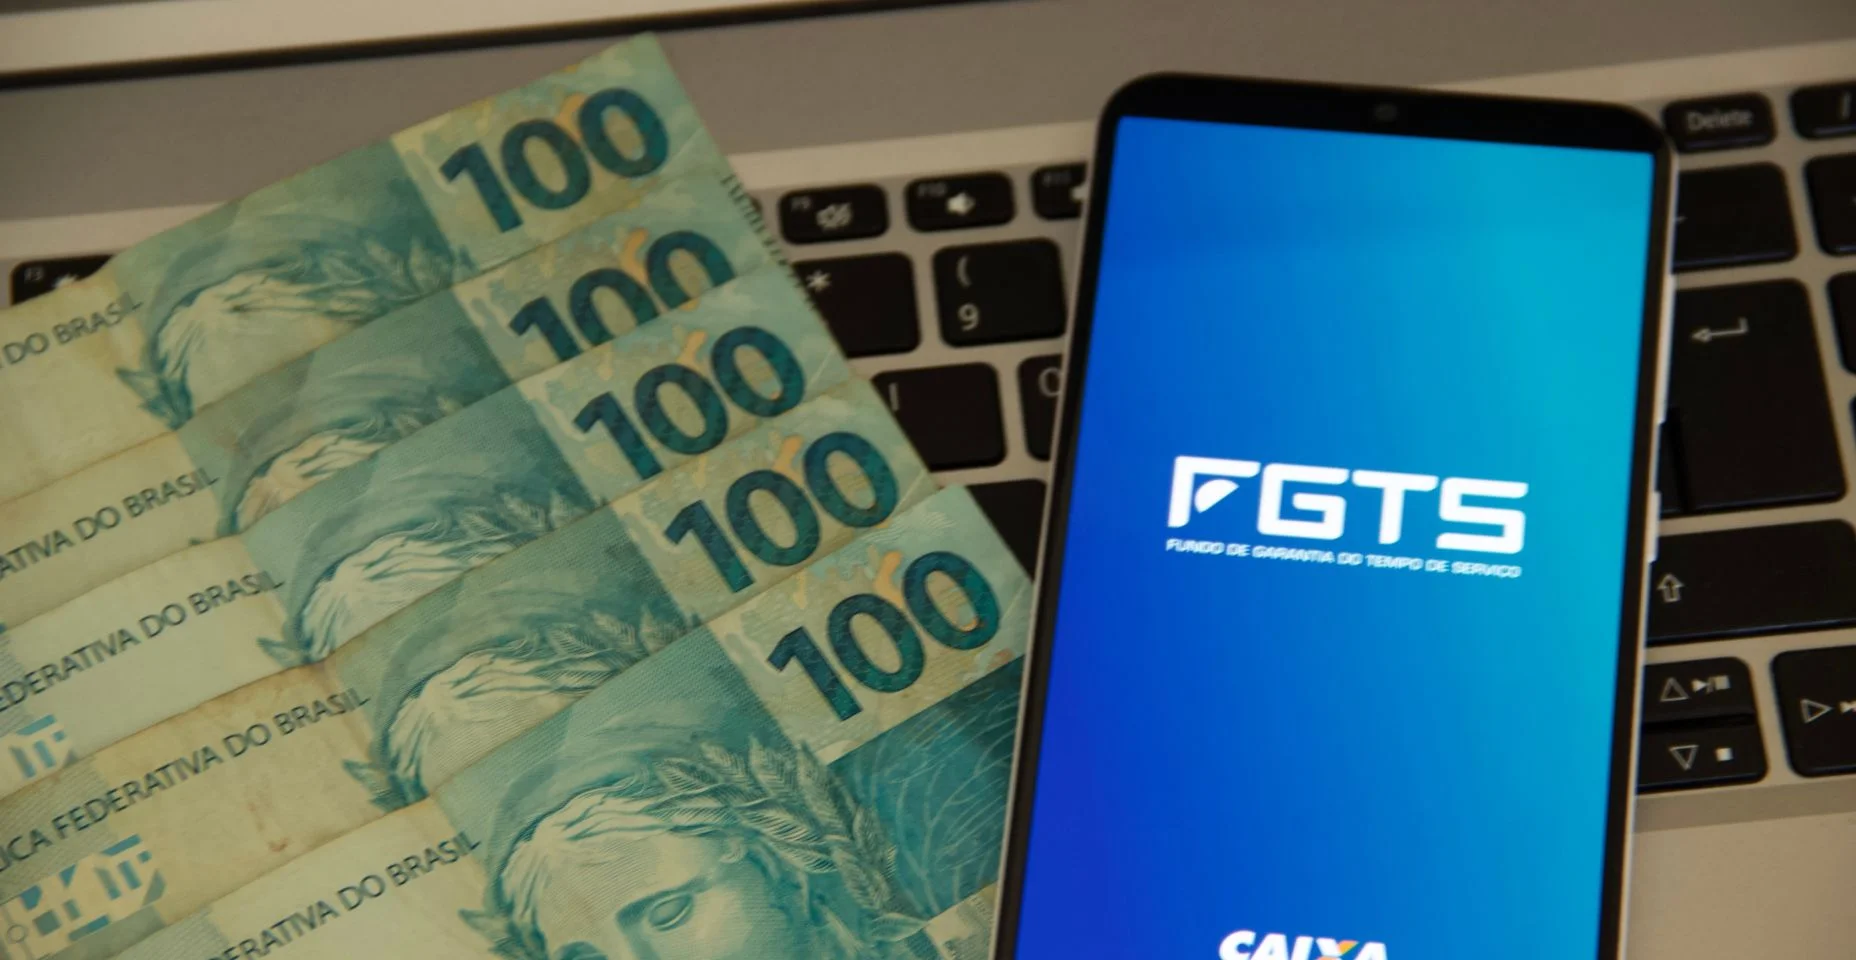 app do FGTS aberto perto de varias notas de 100R$